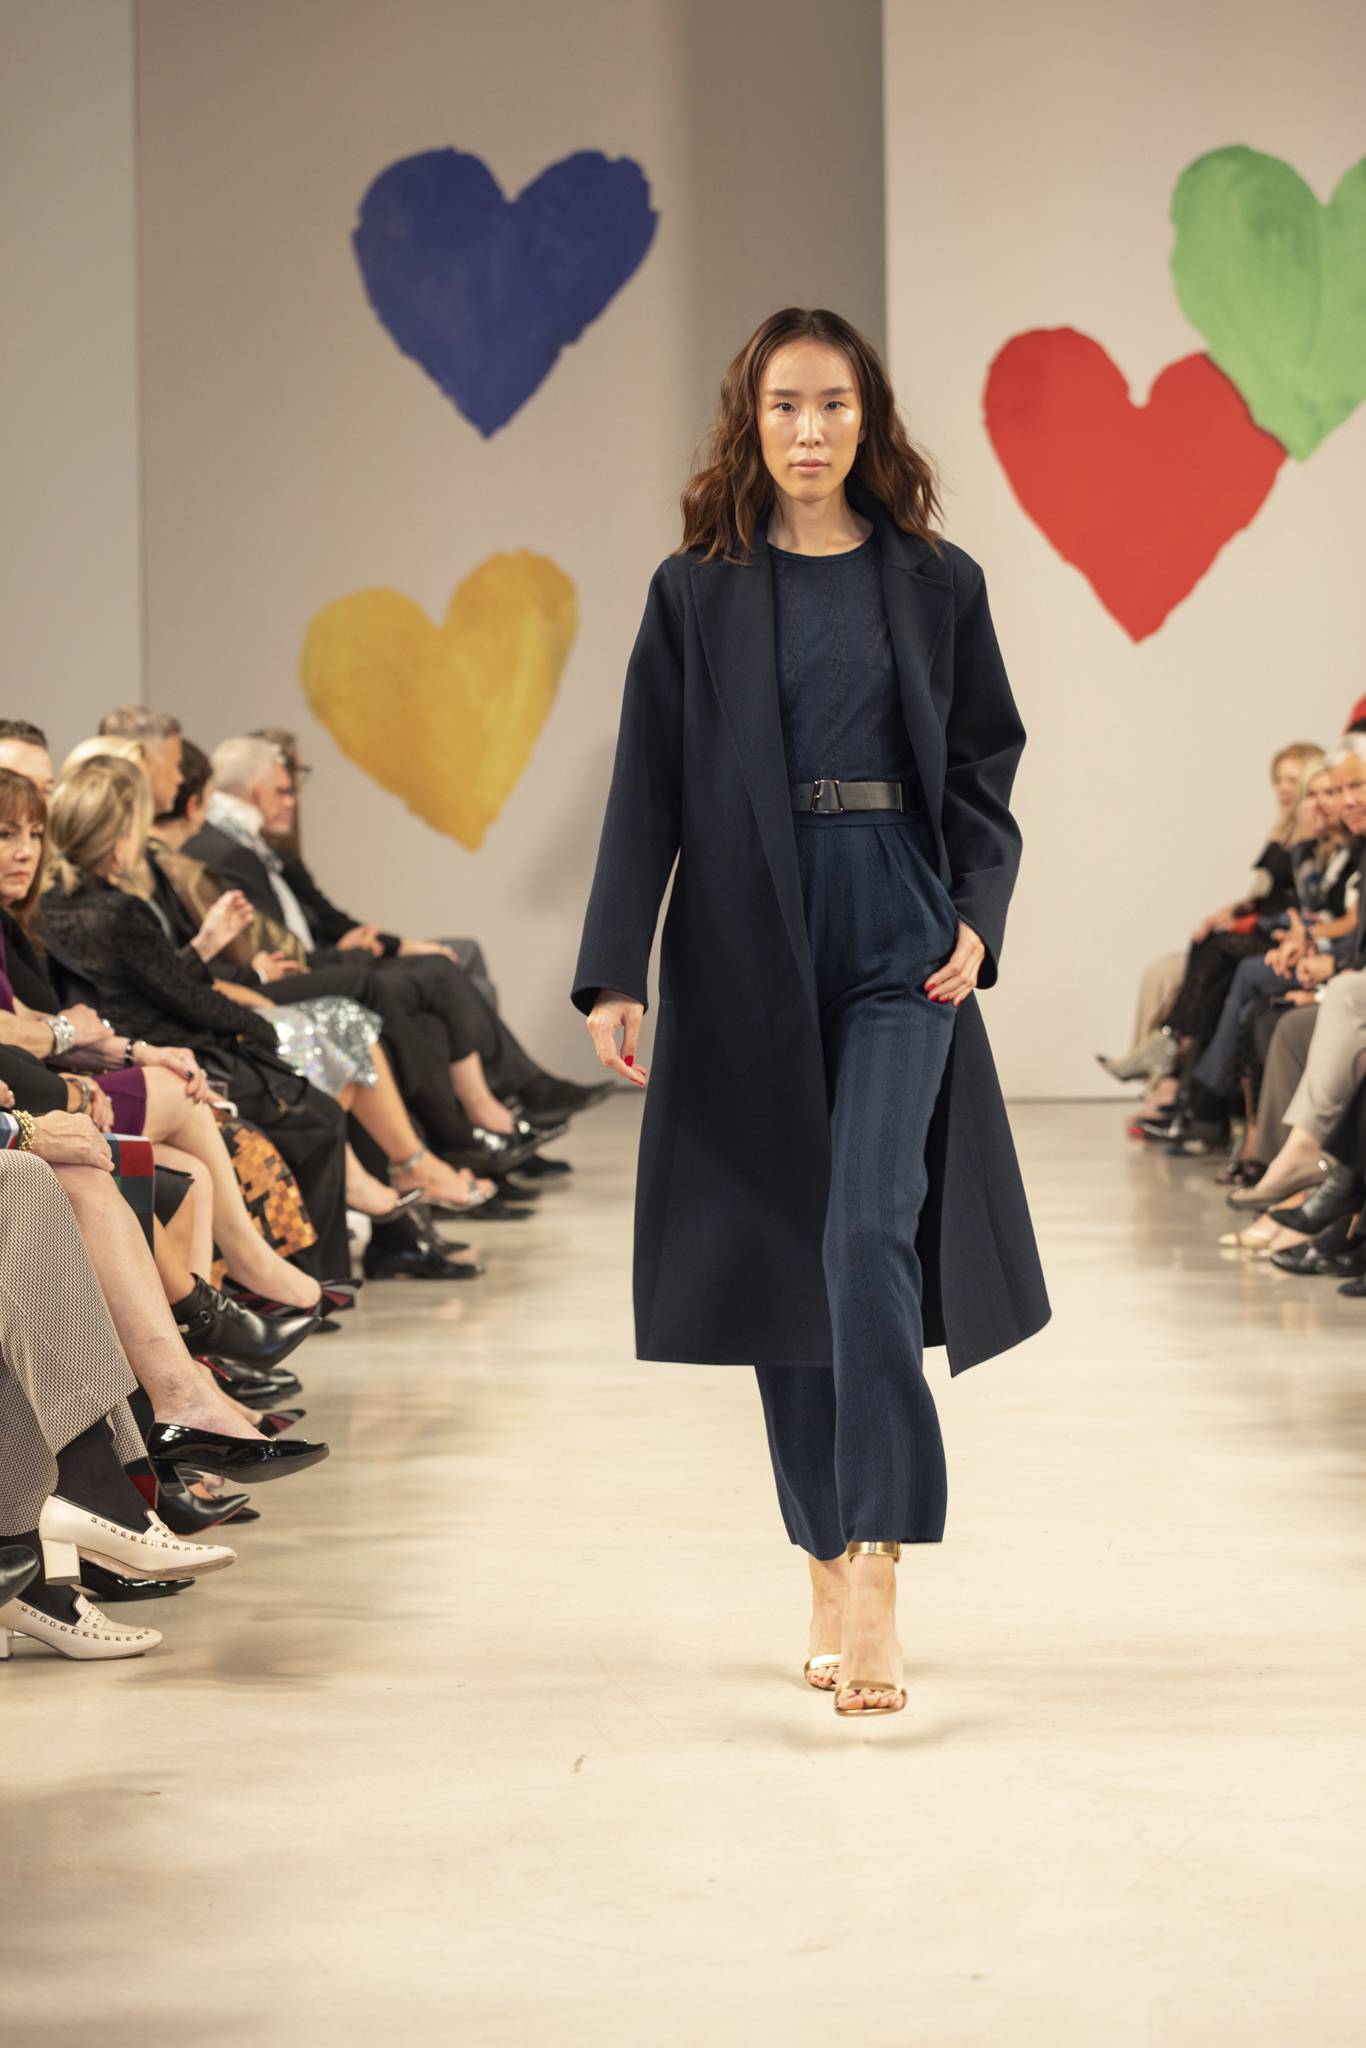 Chicago Fashion Icon Ikram Goldman's Review Of Ferragamo Creative